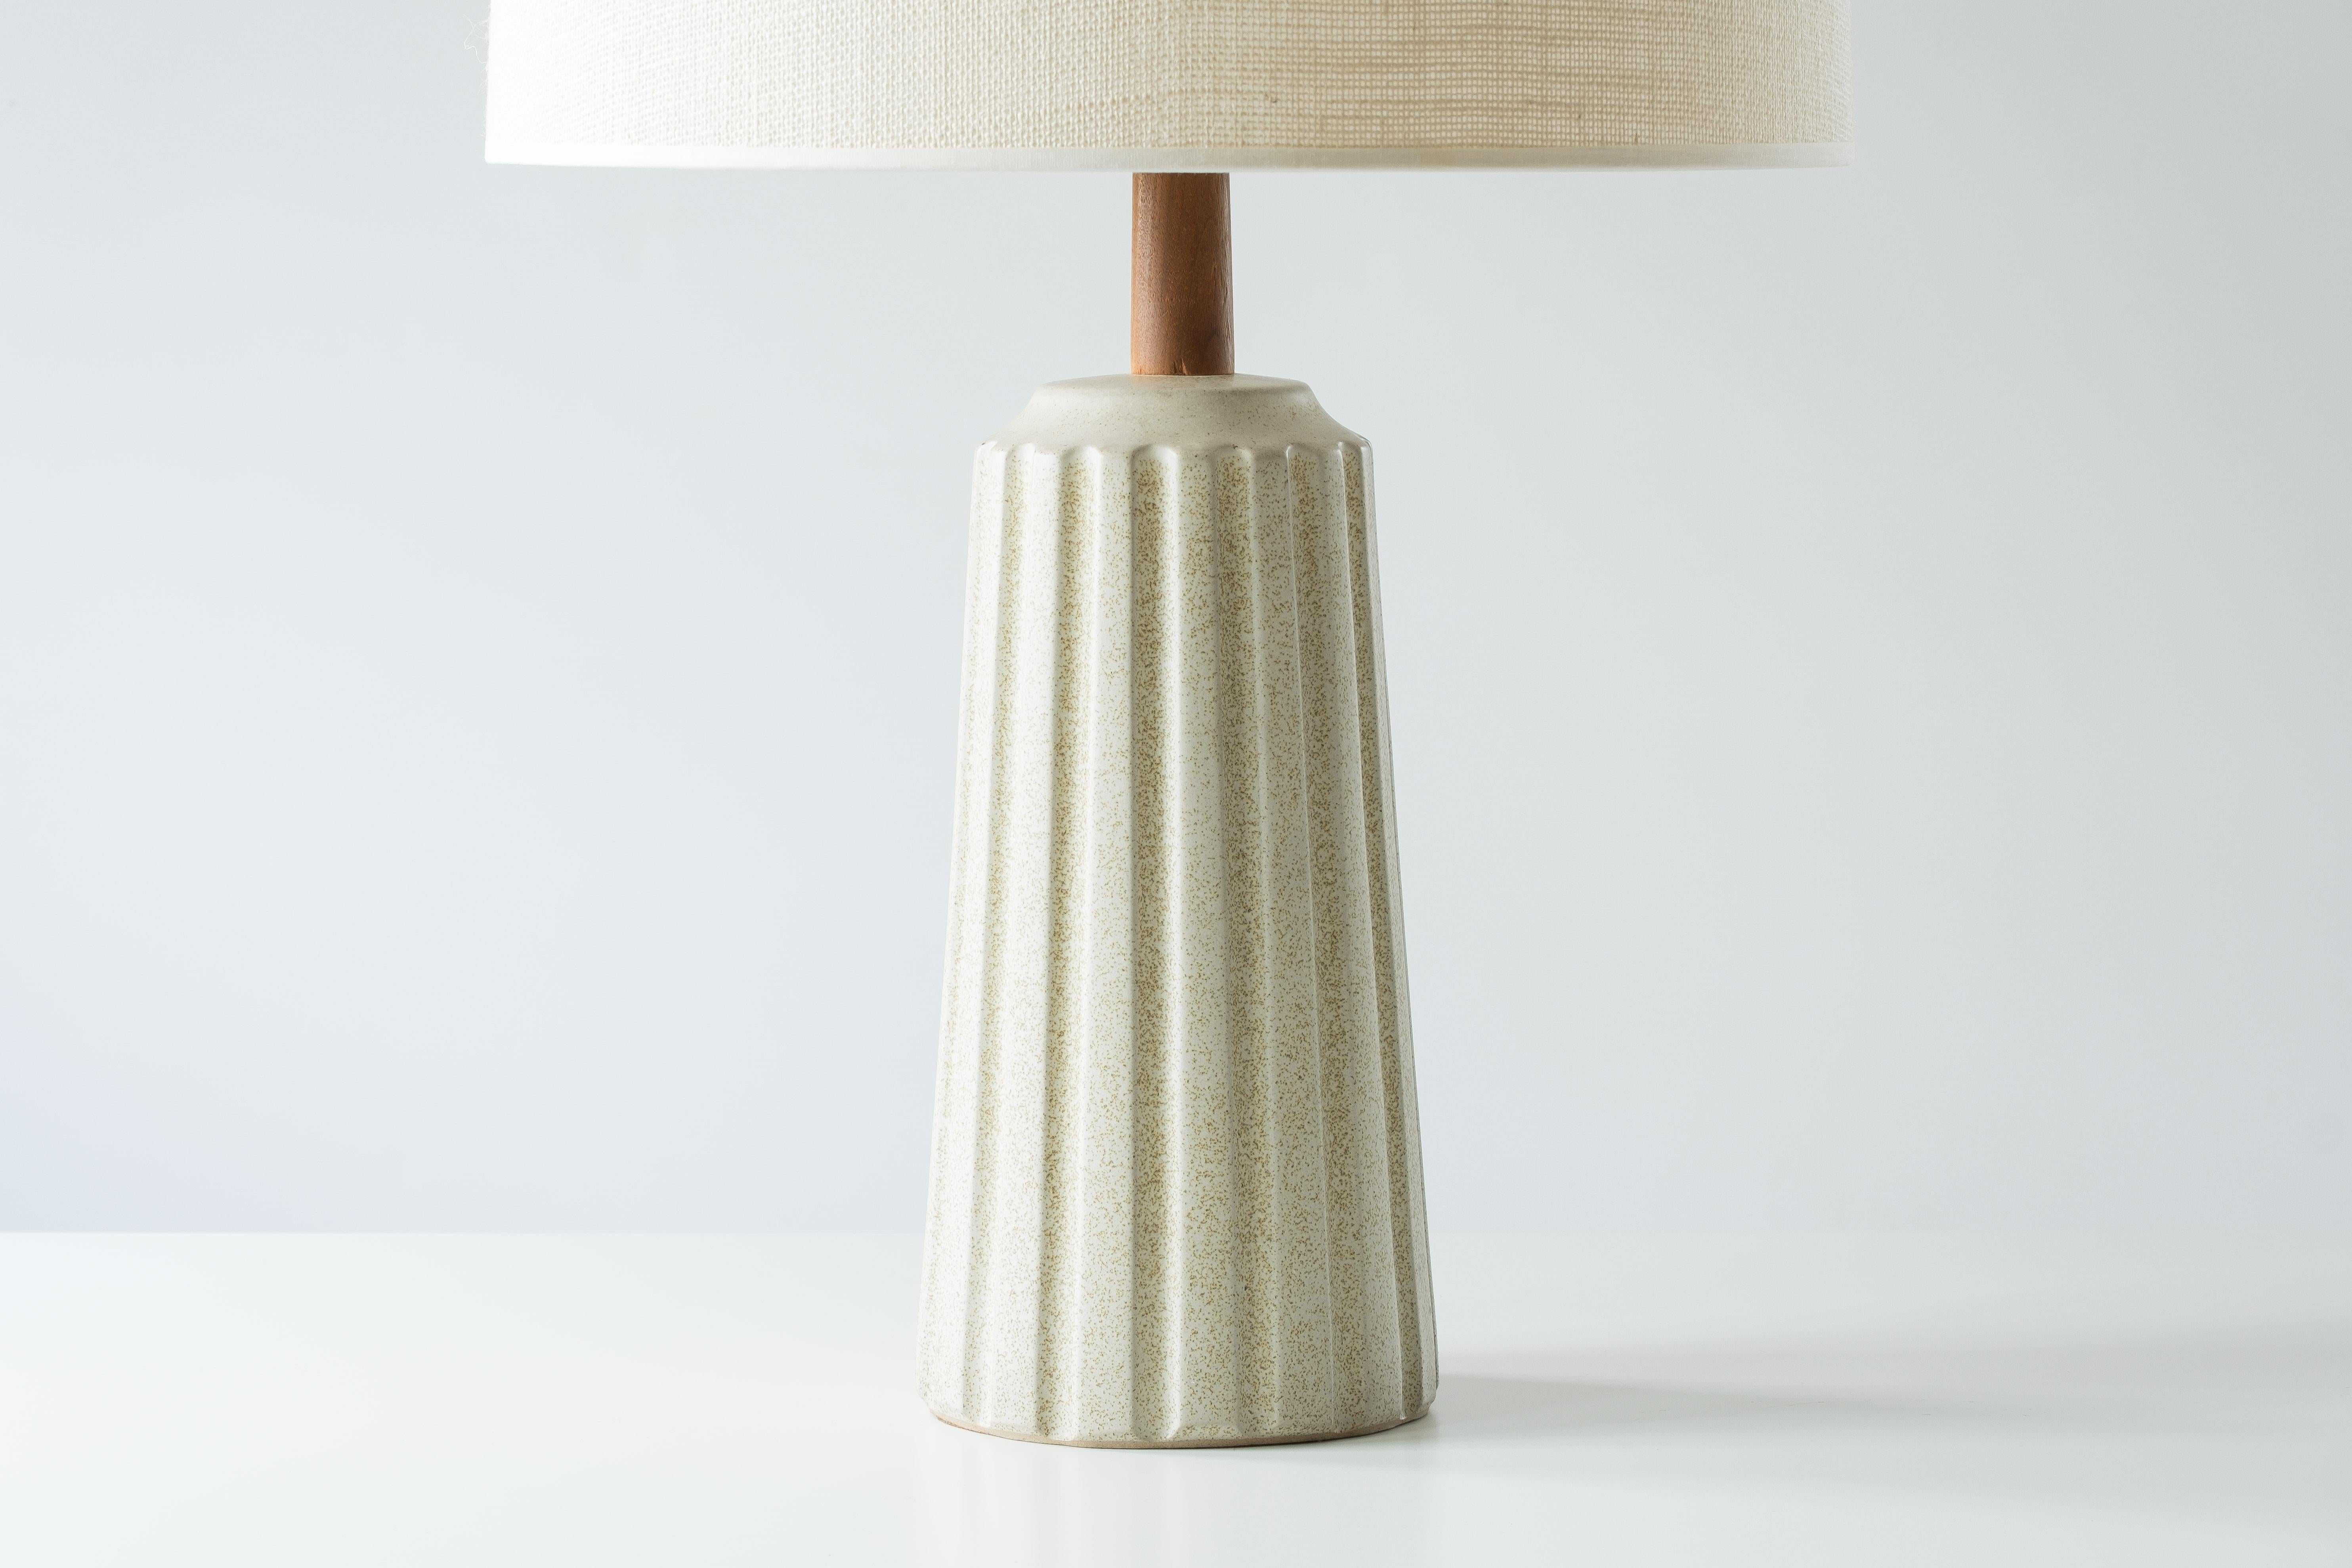 American Martz / Marshall Studios Architectural Table Lamp—Cream Sand Glaze